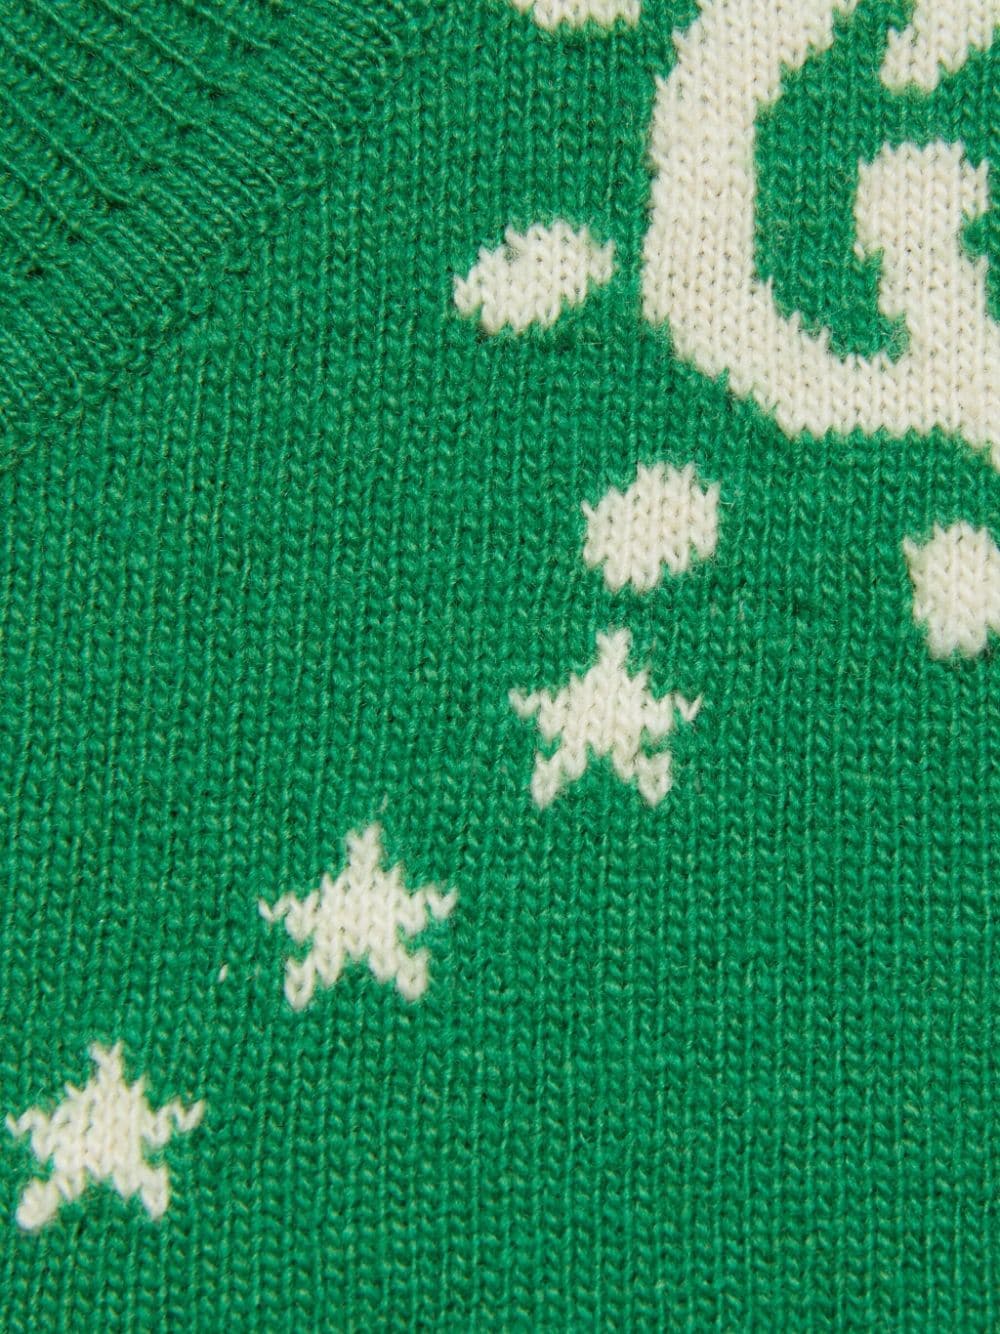 Green wool sweater for children